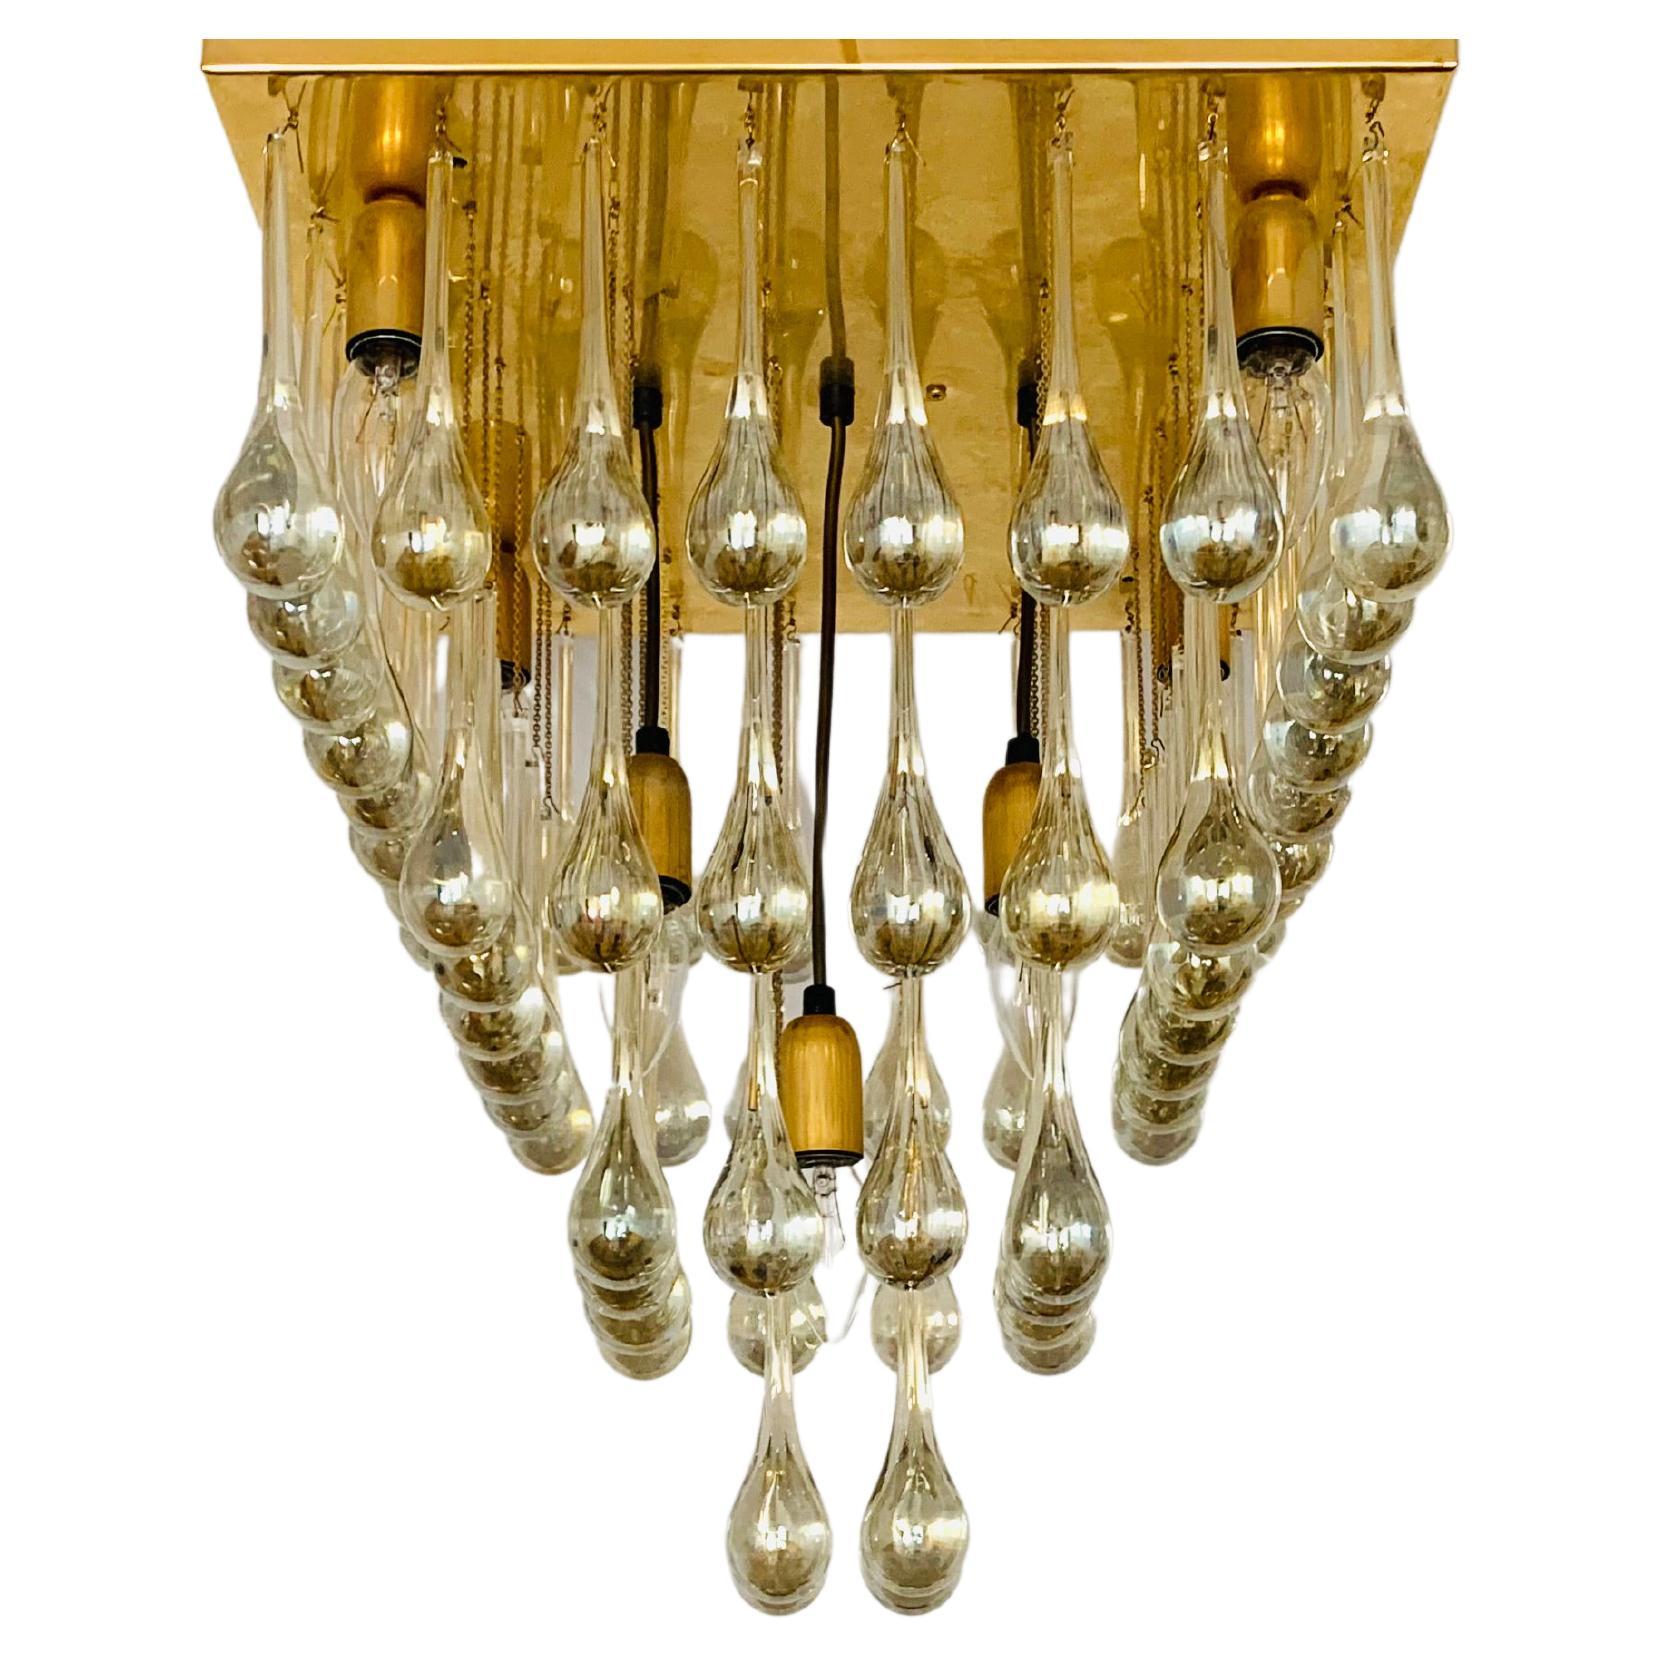 Ceiling chandelier by Ernst Palme For Sale